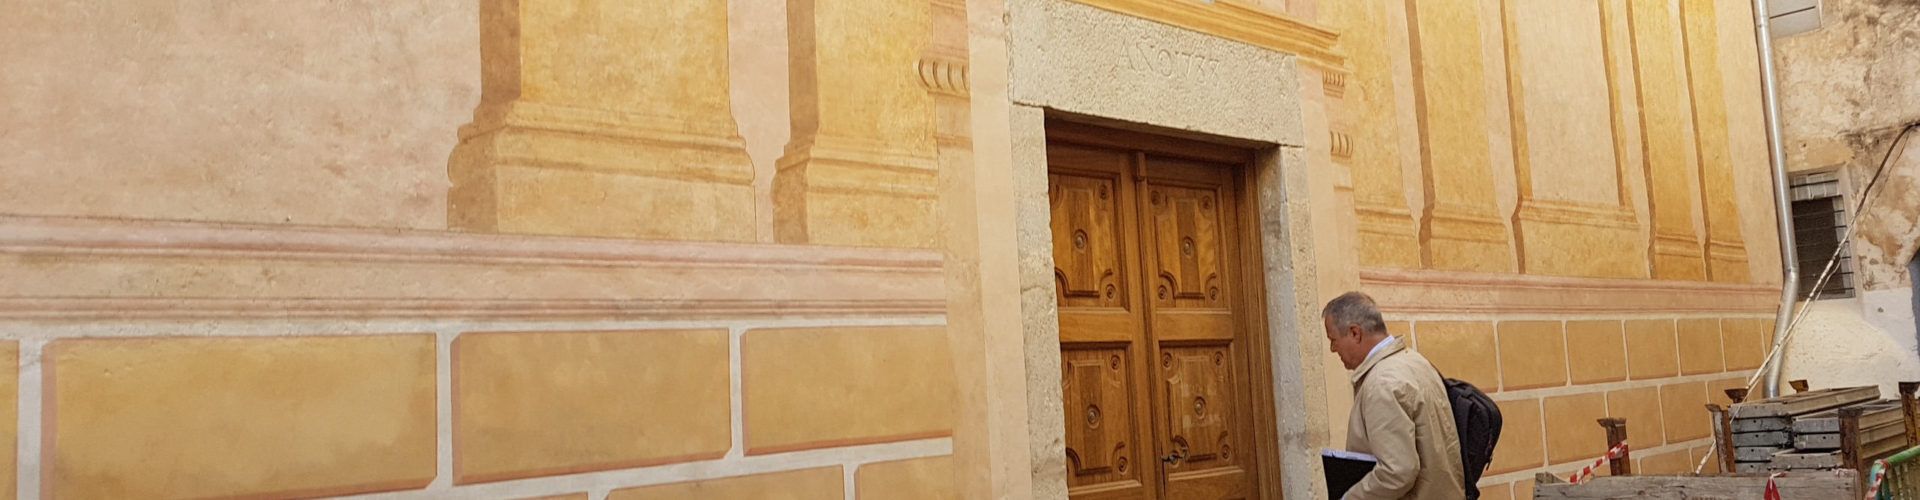 La fachada de Santa Victoria de Vinaròs ya luce restauradas sus arquitecturas fingidas